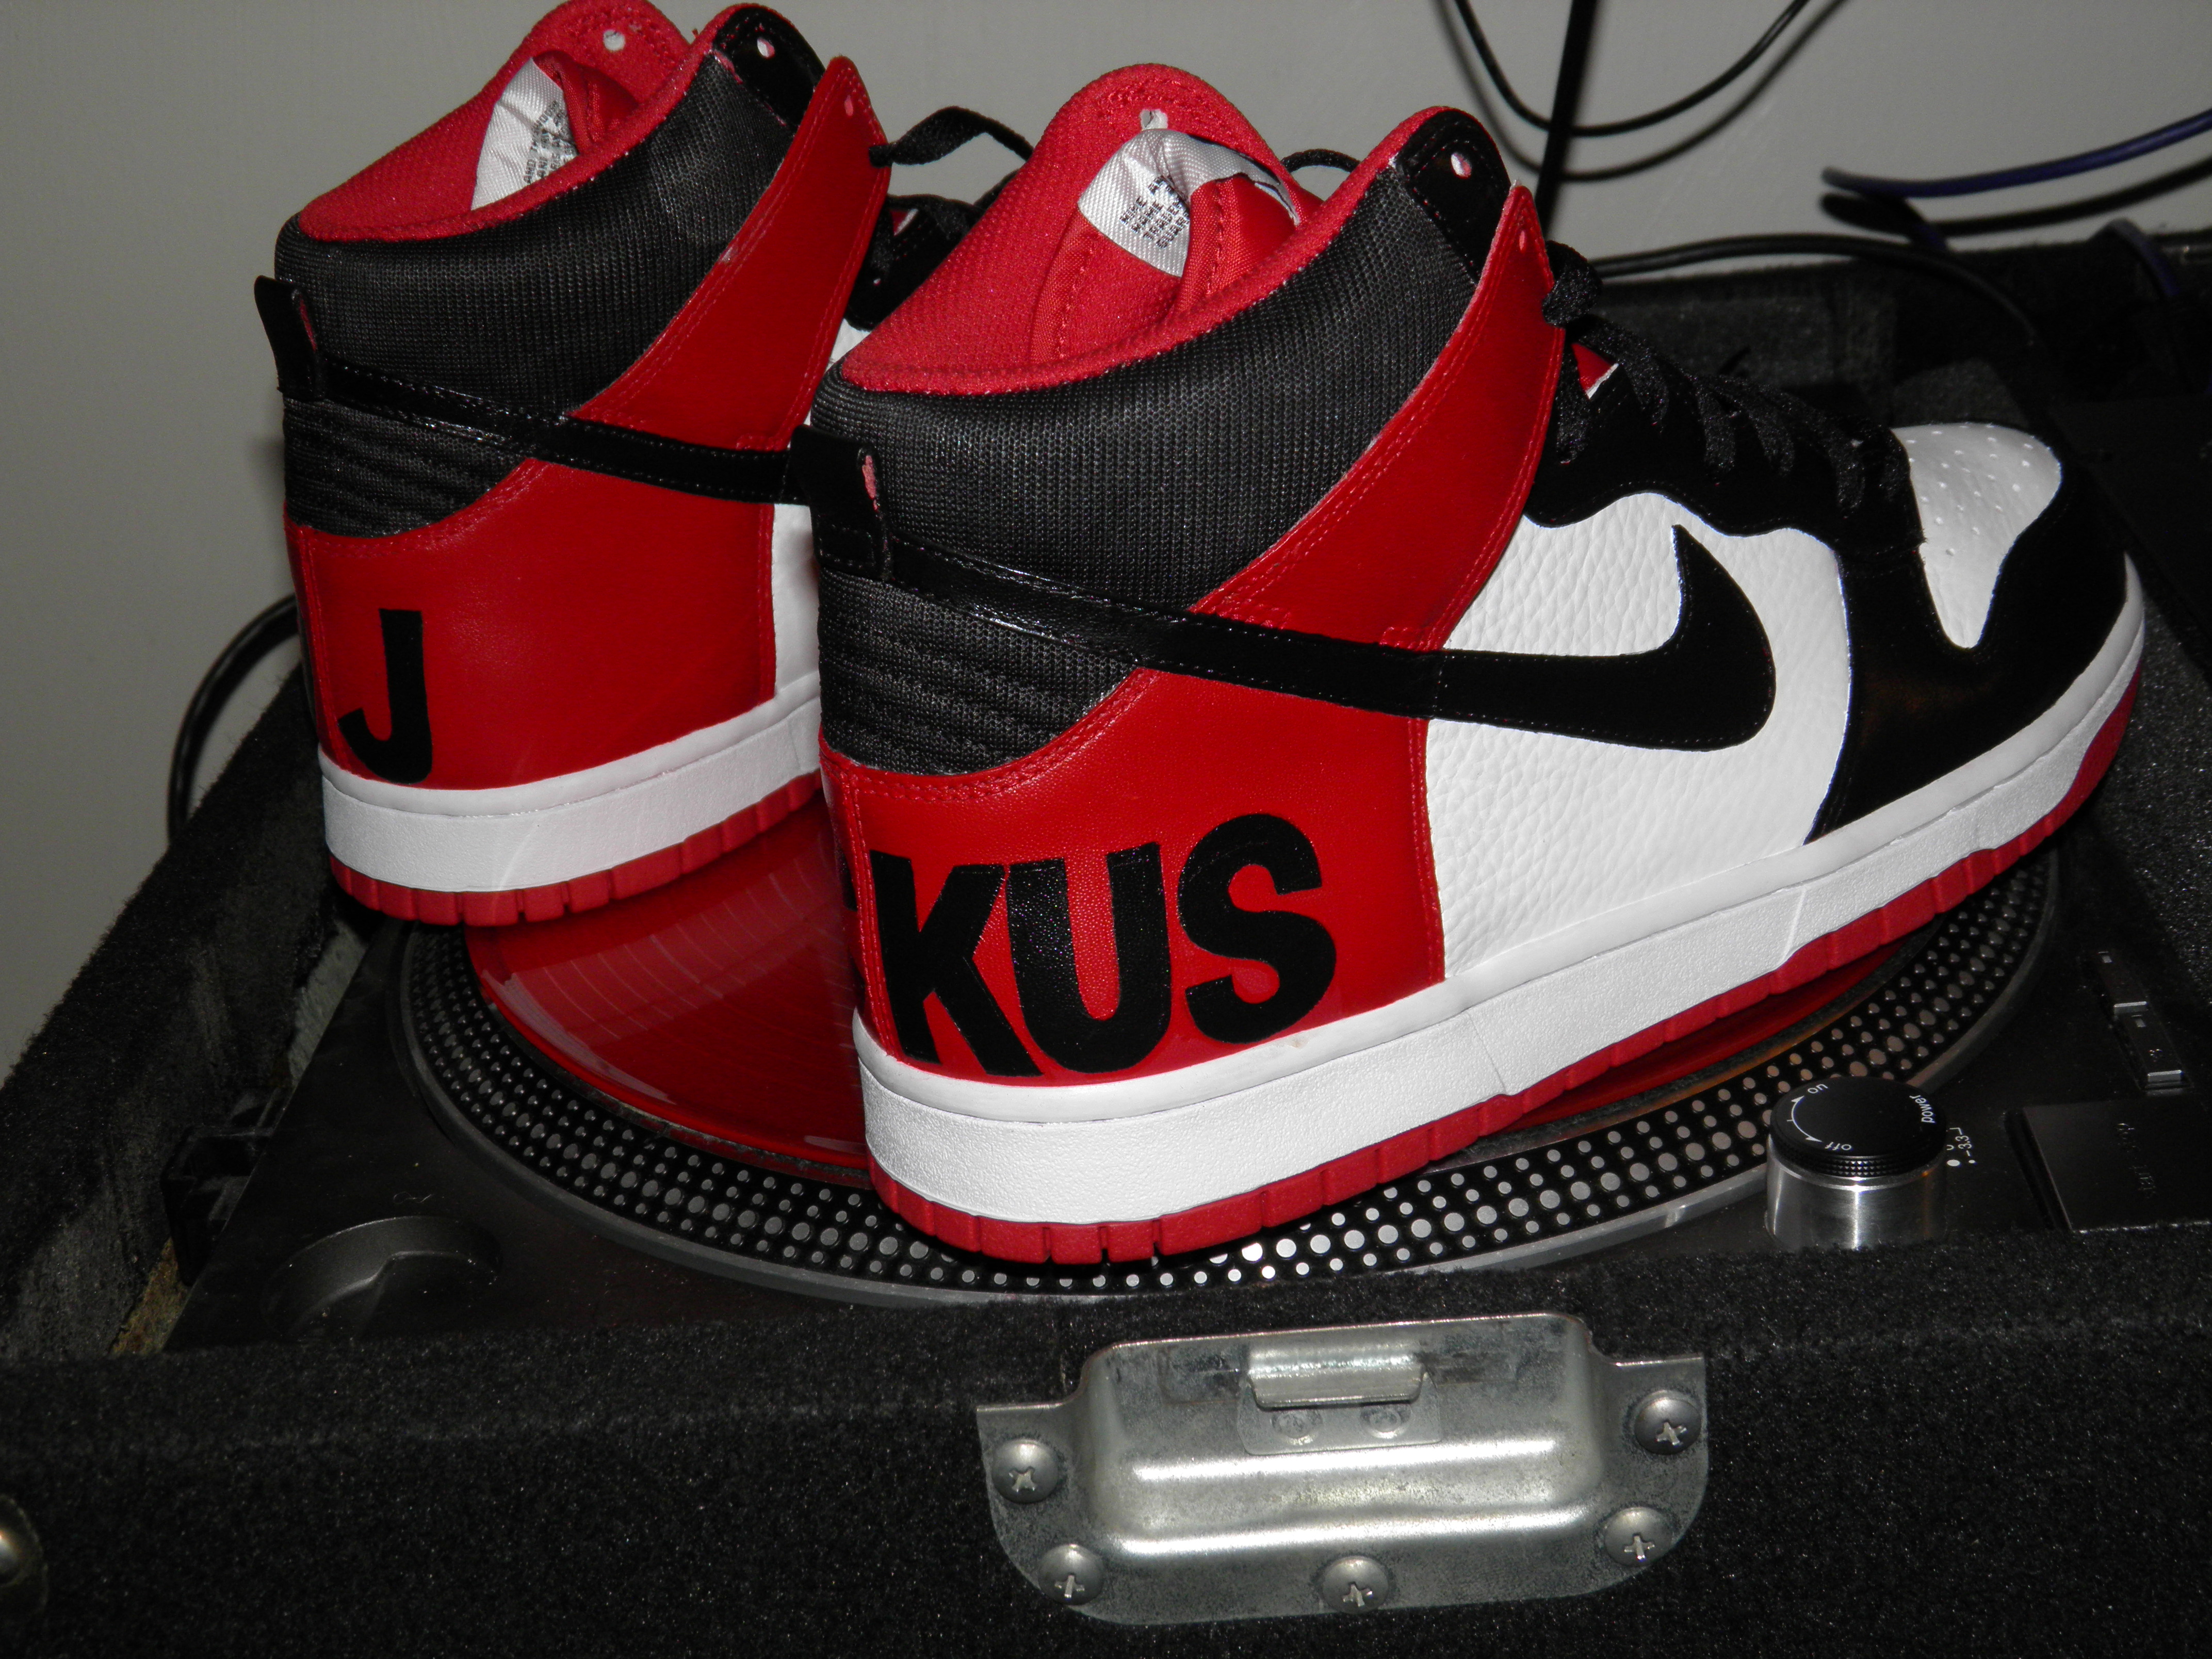 DJ Ruckus. DJ Ruckus Collaboration. Model: Dunk Hi Colorway: White/Red/Black